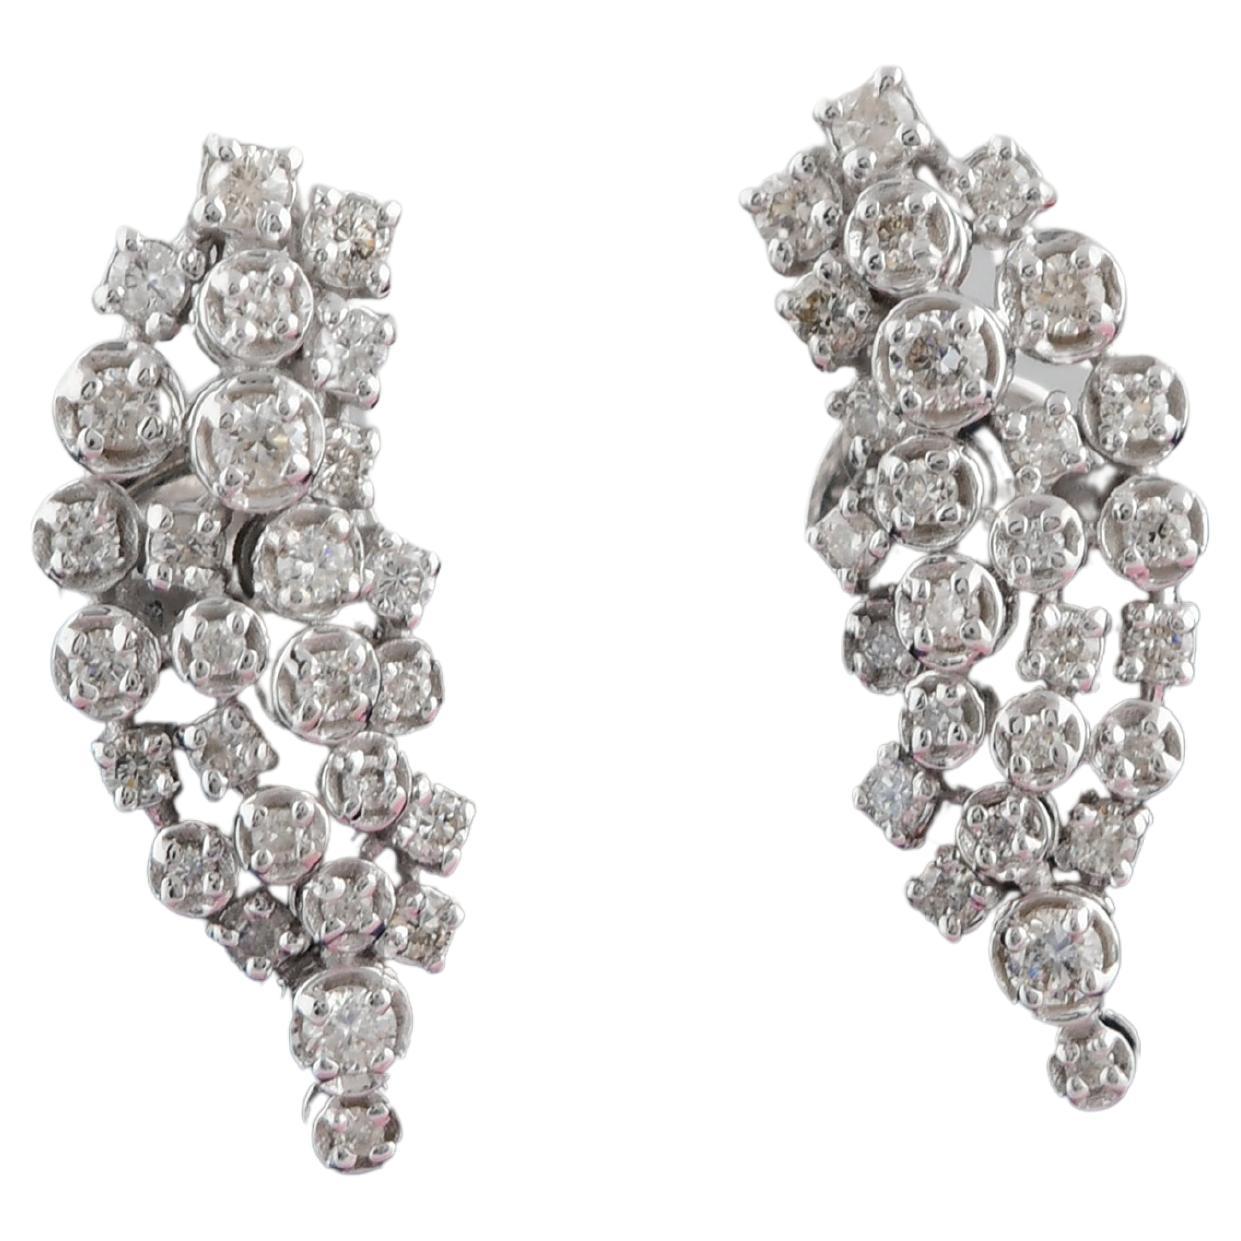 0.72 Carat SI Clarity HI Color Diamond Earrings 14 Karat White Gold Fine Jewelry